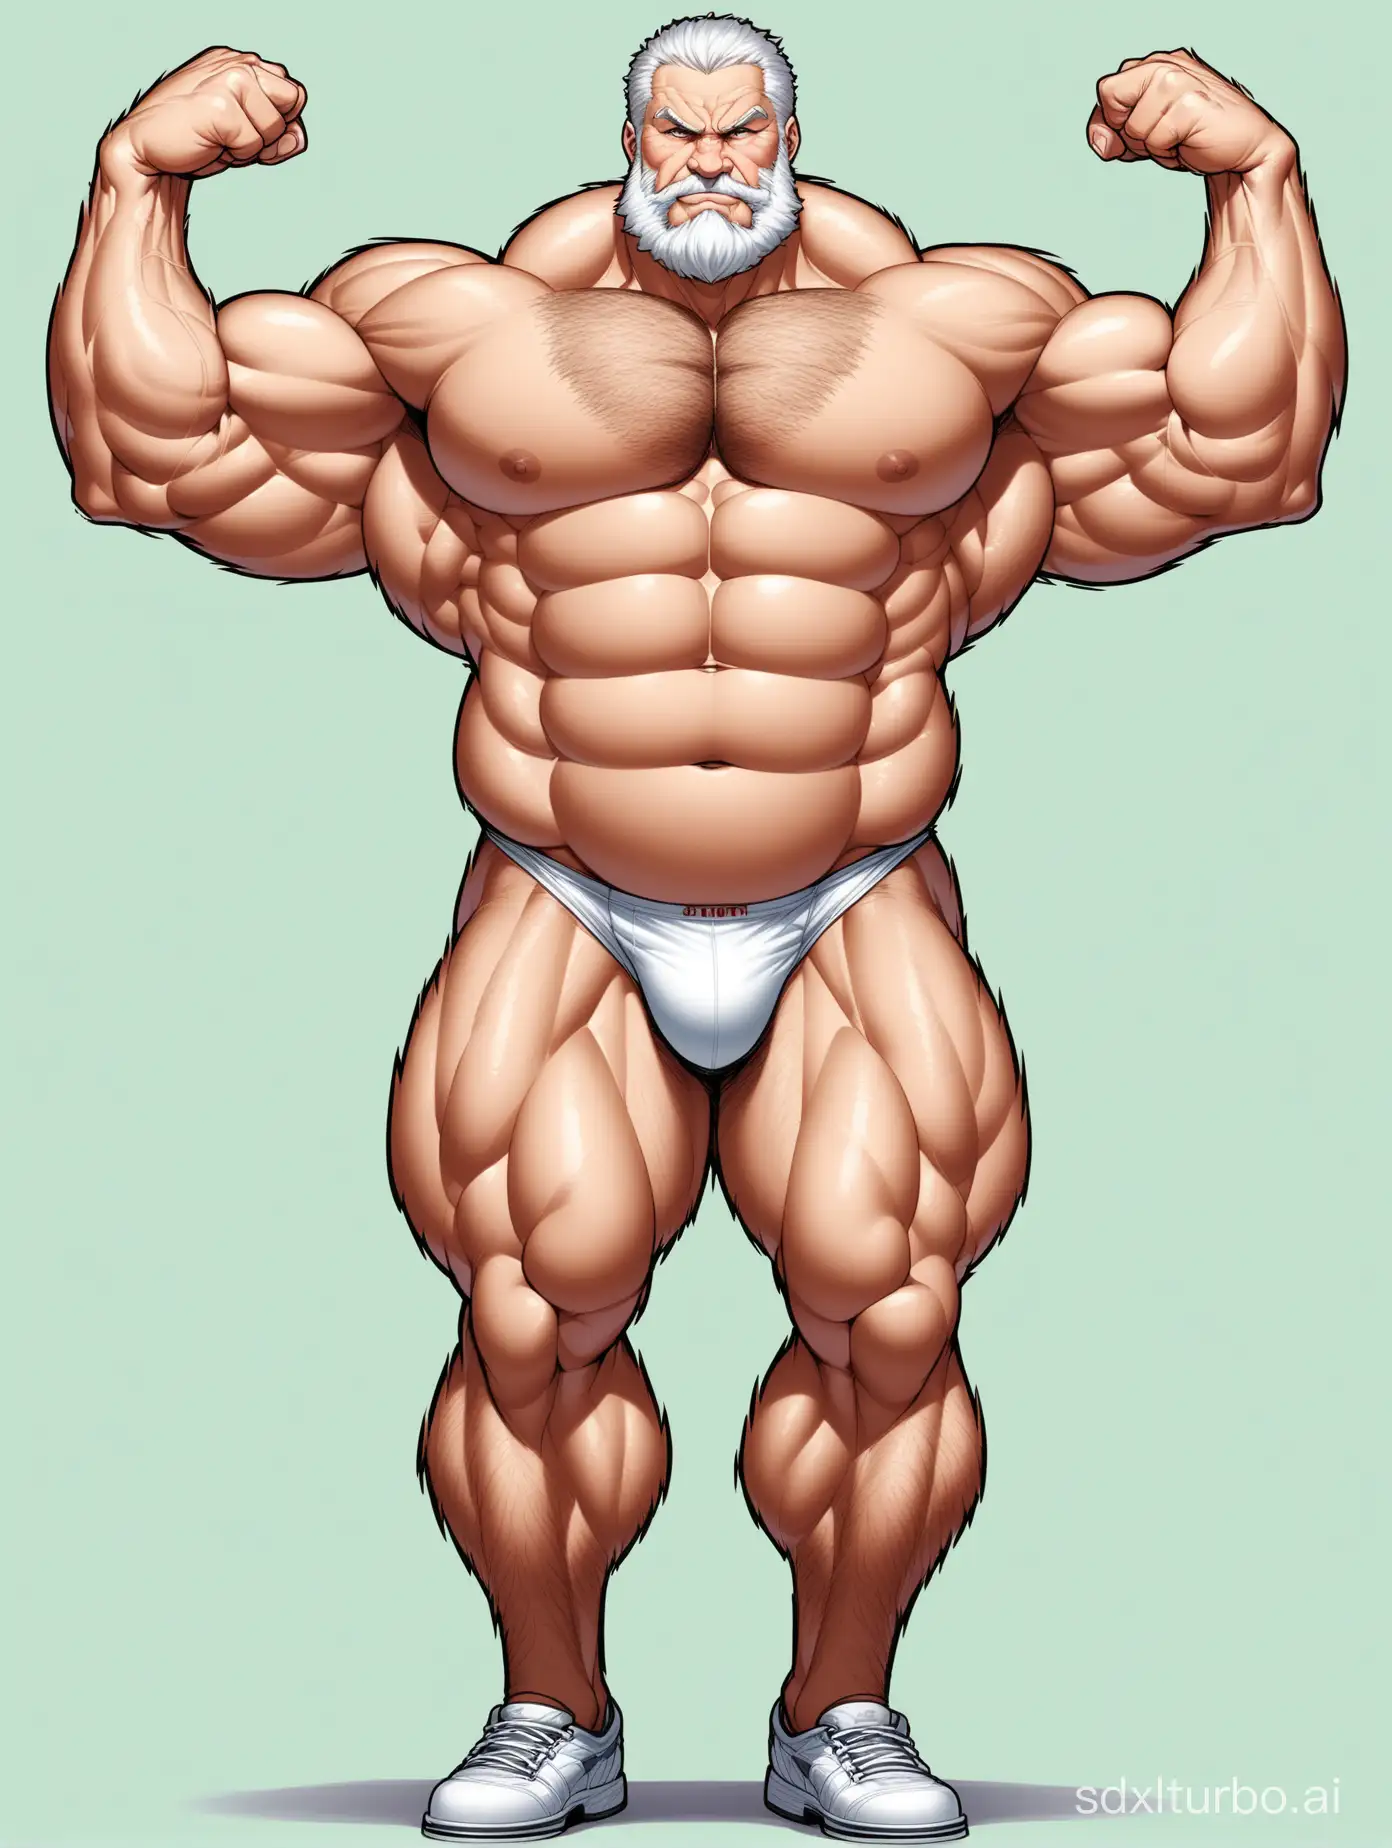 Massive-Muscle-Bodybuilder-Showing-Huge-Biceps-in-Underwear